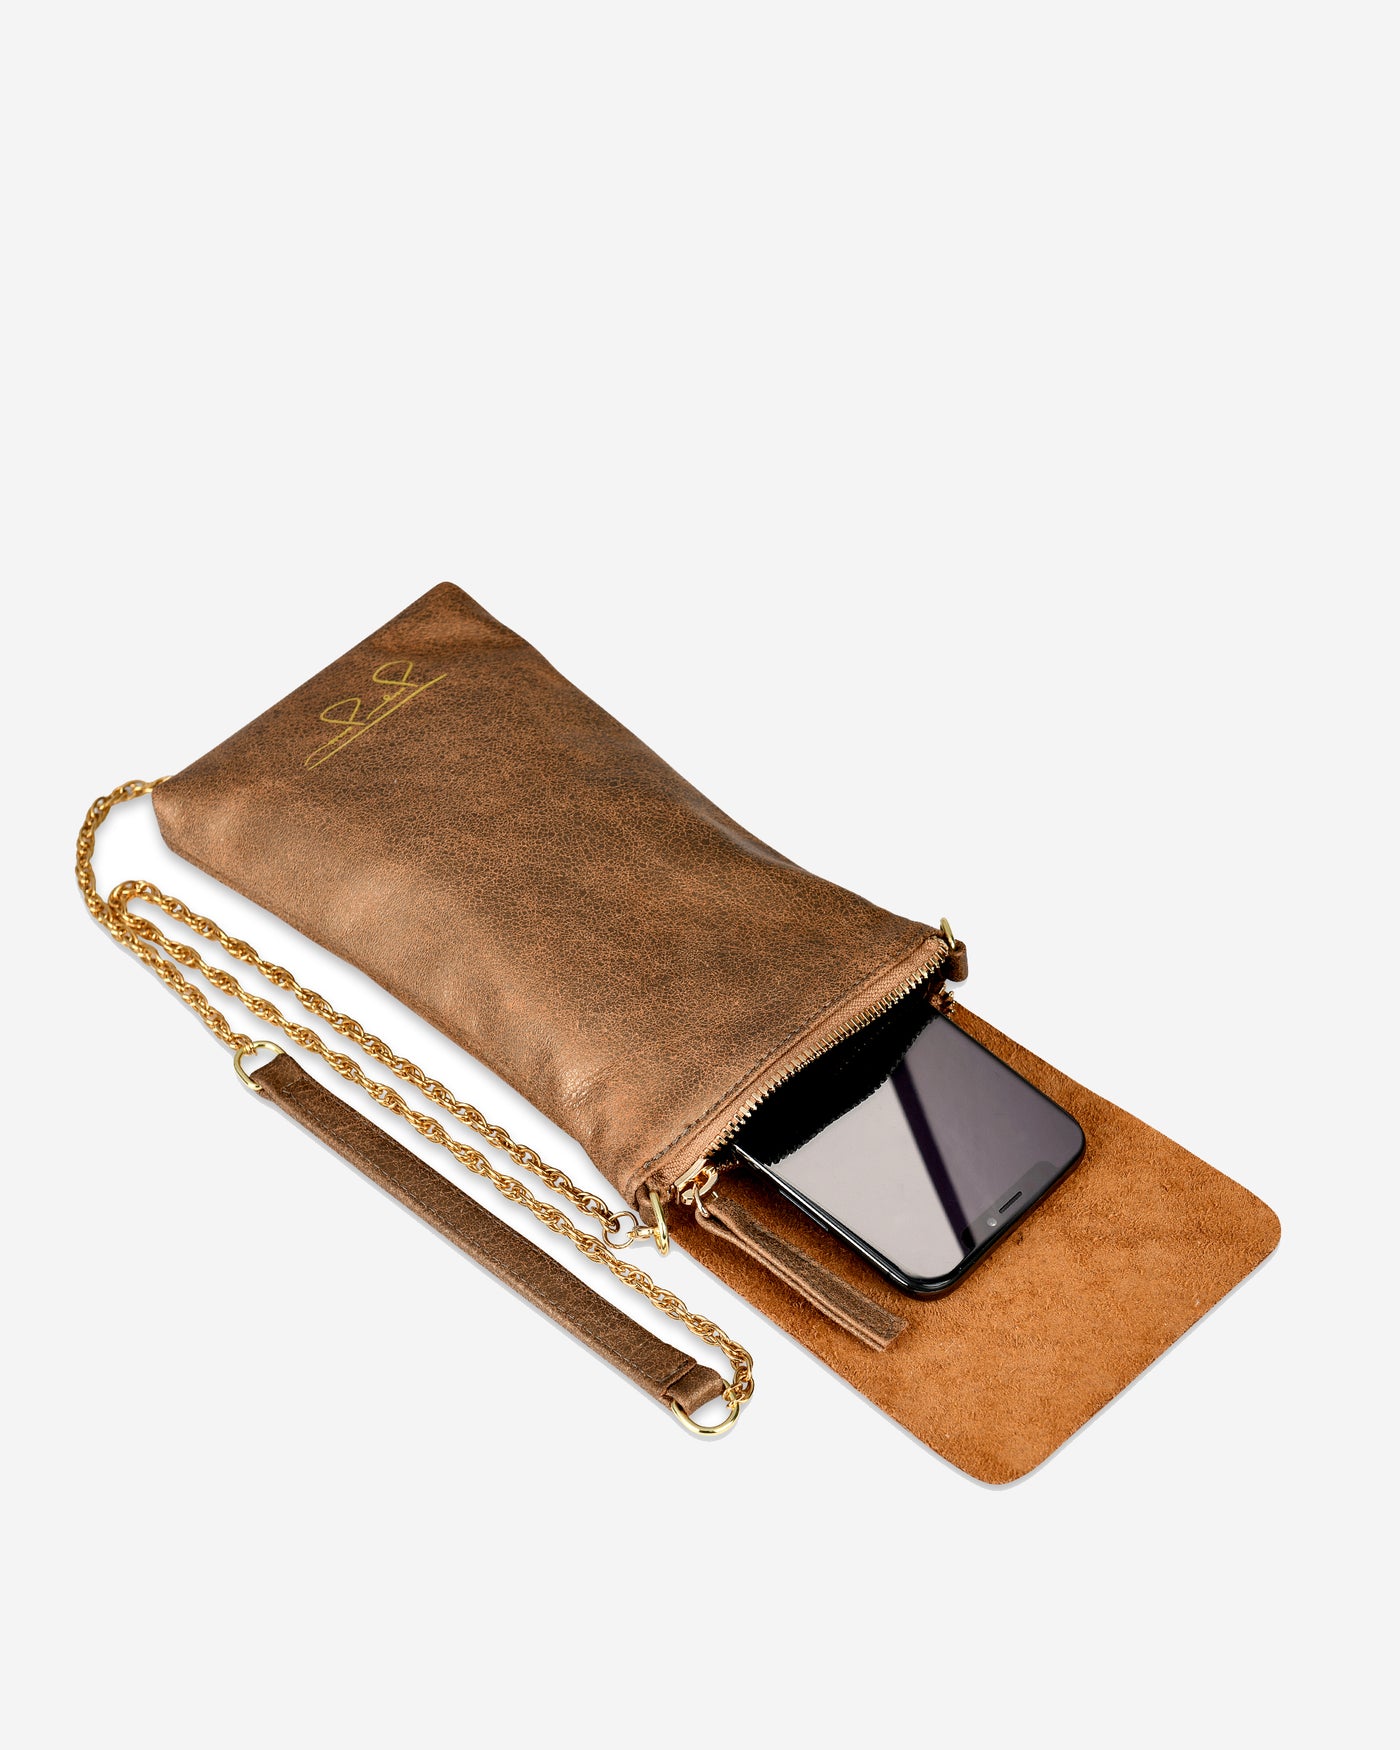 Alex Phone Bag - Gold Phone Bag Joey James, The Label   